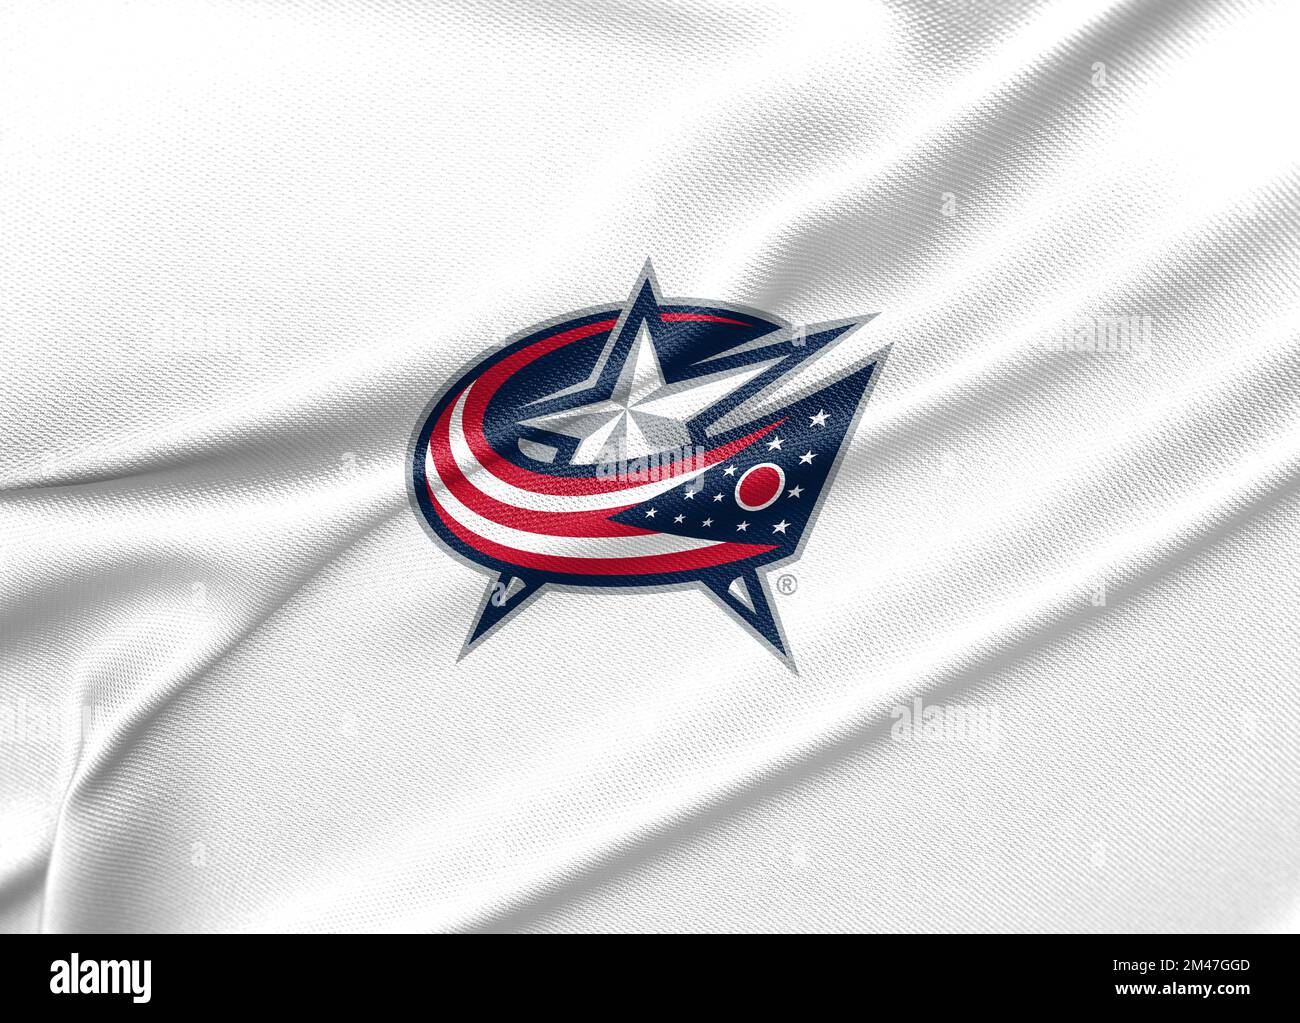 Columbus Blue Jackets Logos - National Hockey League (NHL) - Chris